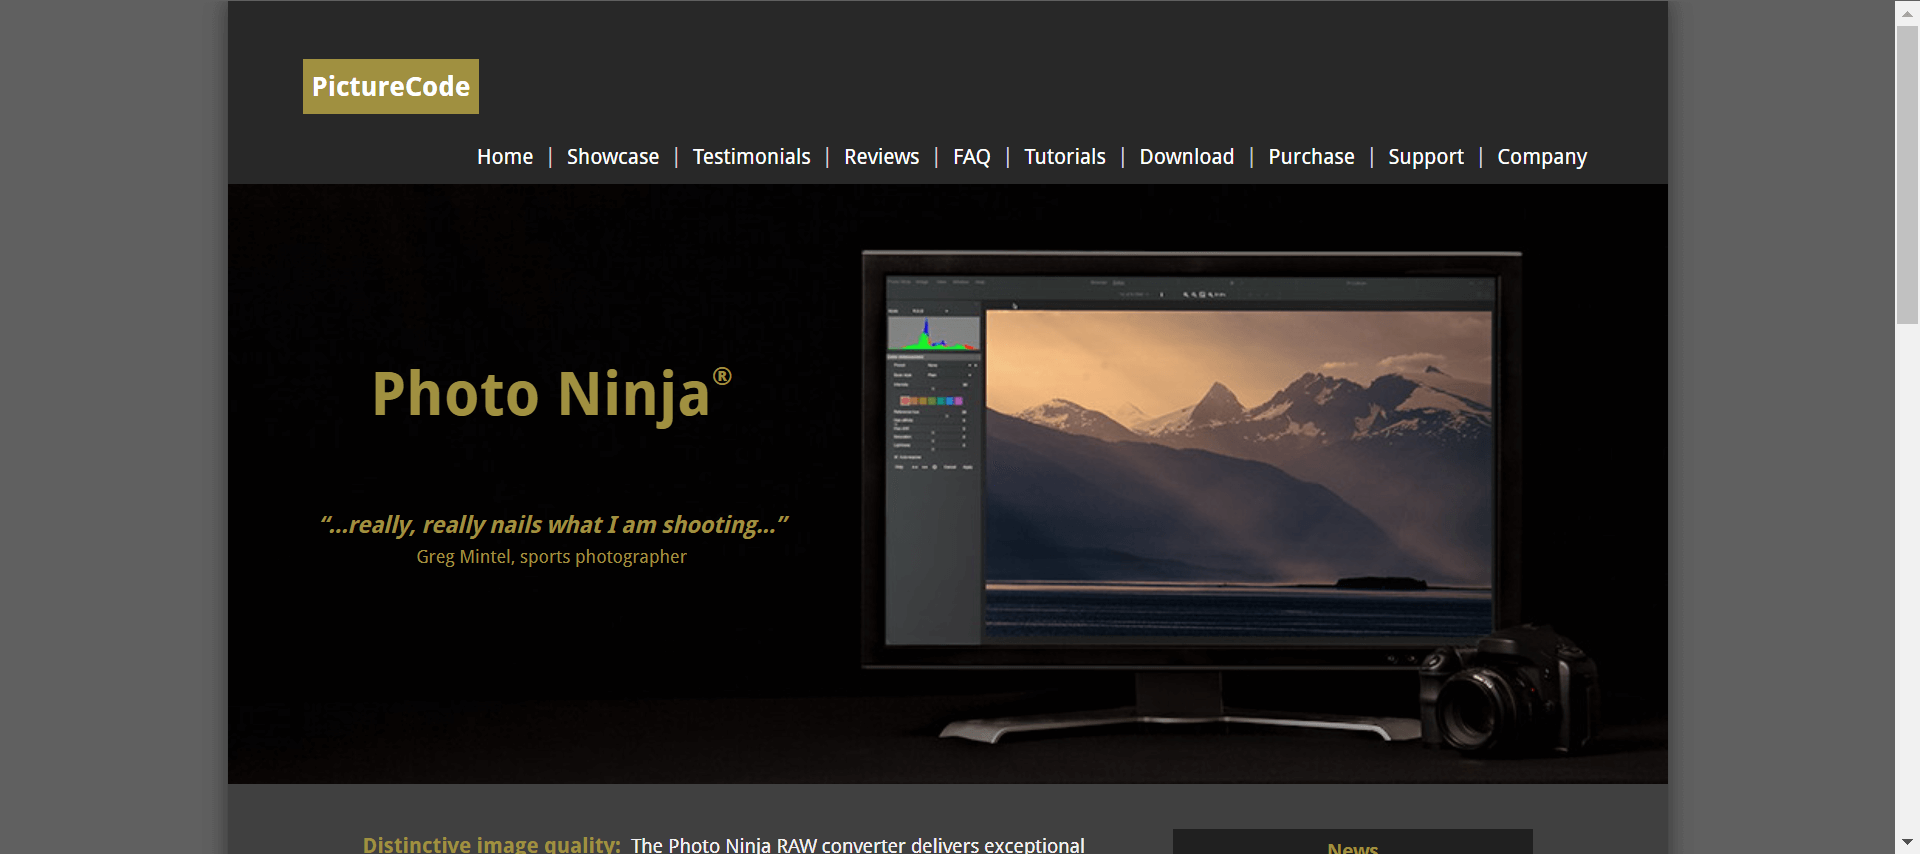 Photo Ninja's website